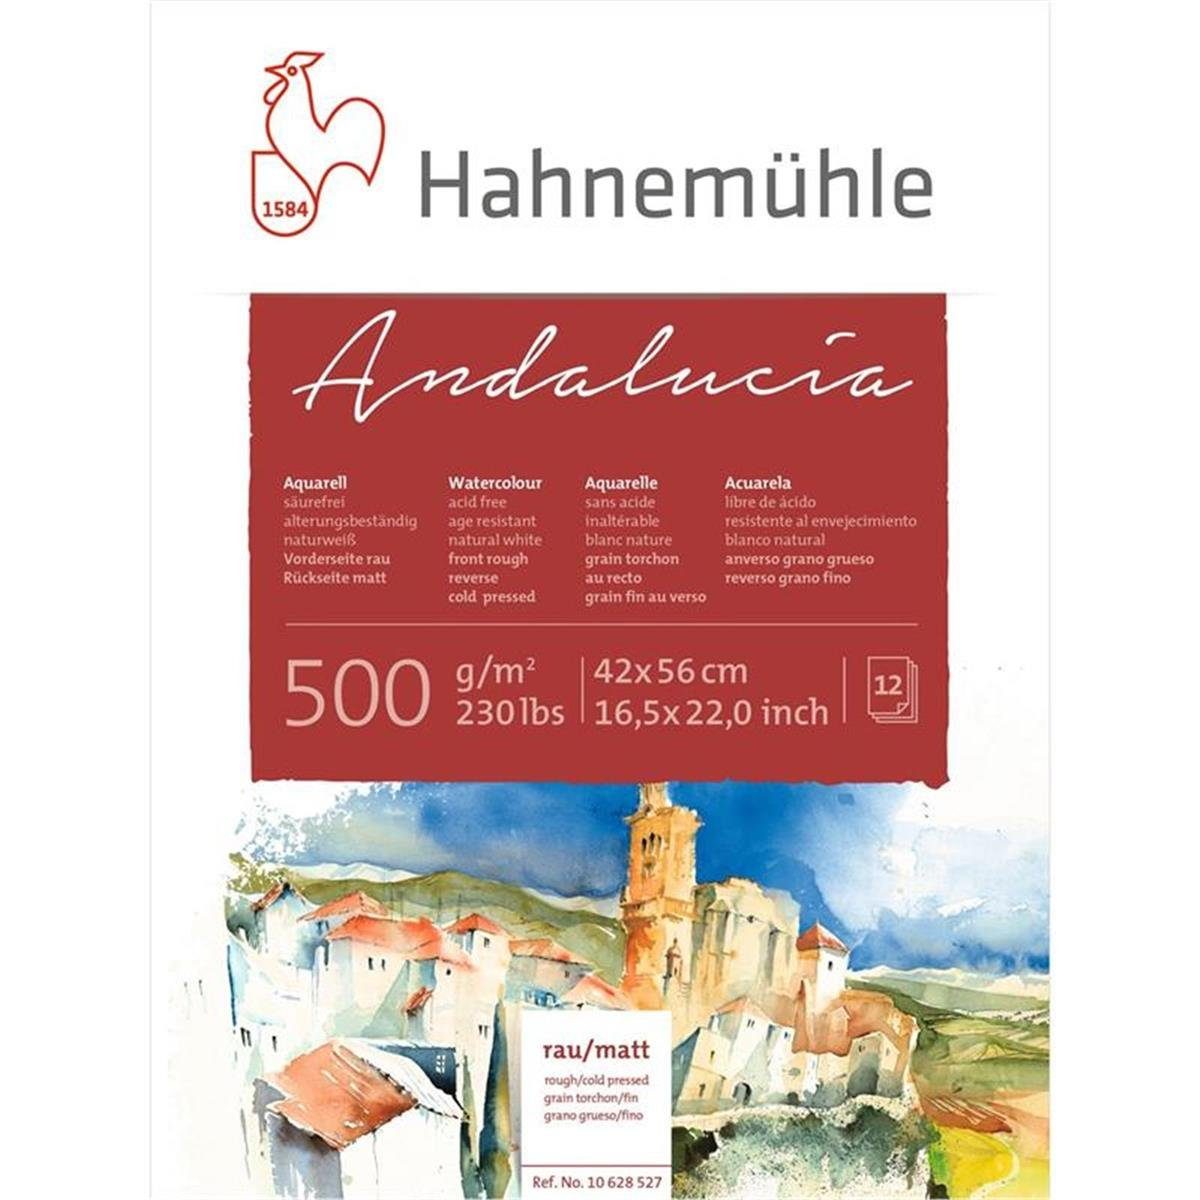 Hahnemühle Aquarellpapier Andalucía Aquarellkarton - rau/matt - 500 g/m² - 42 x 56 cm - 12 Blatt